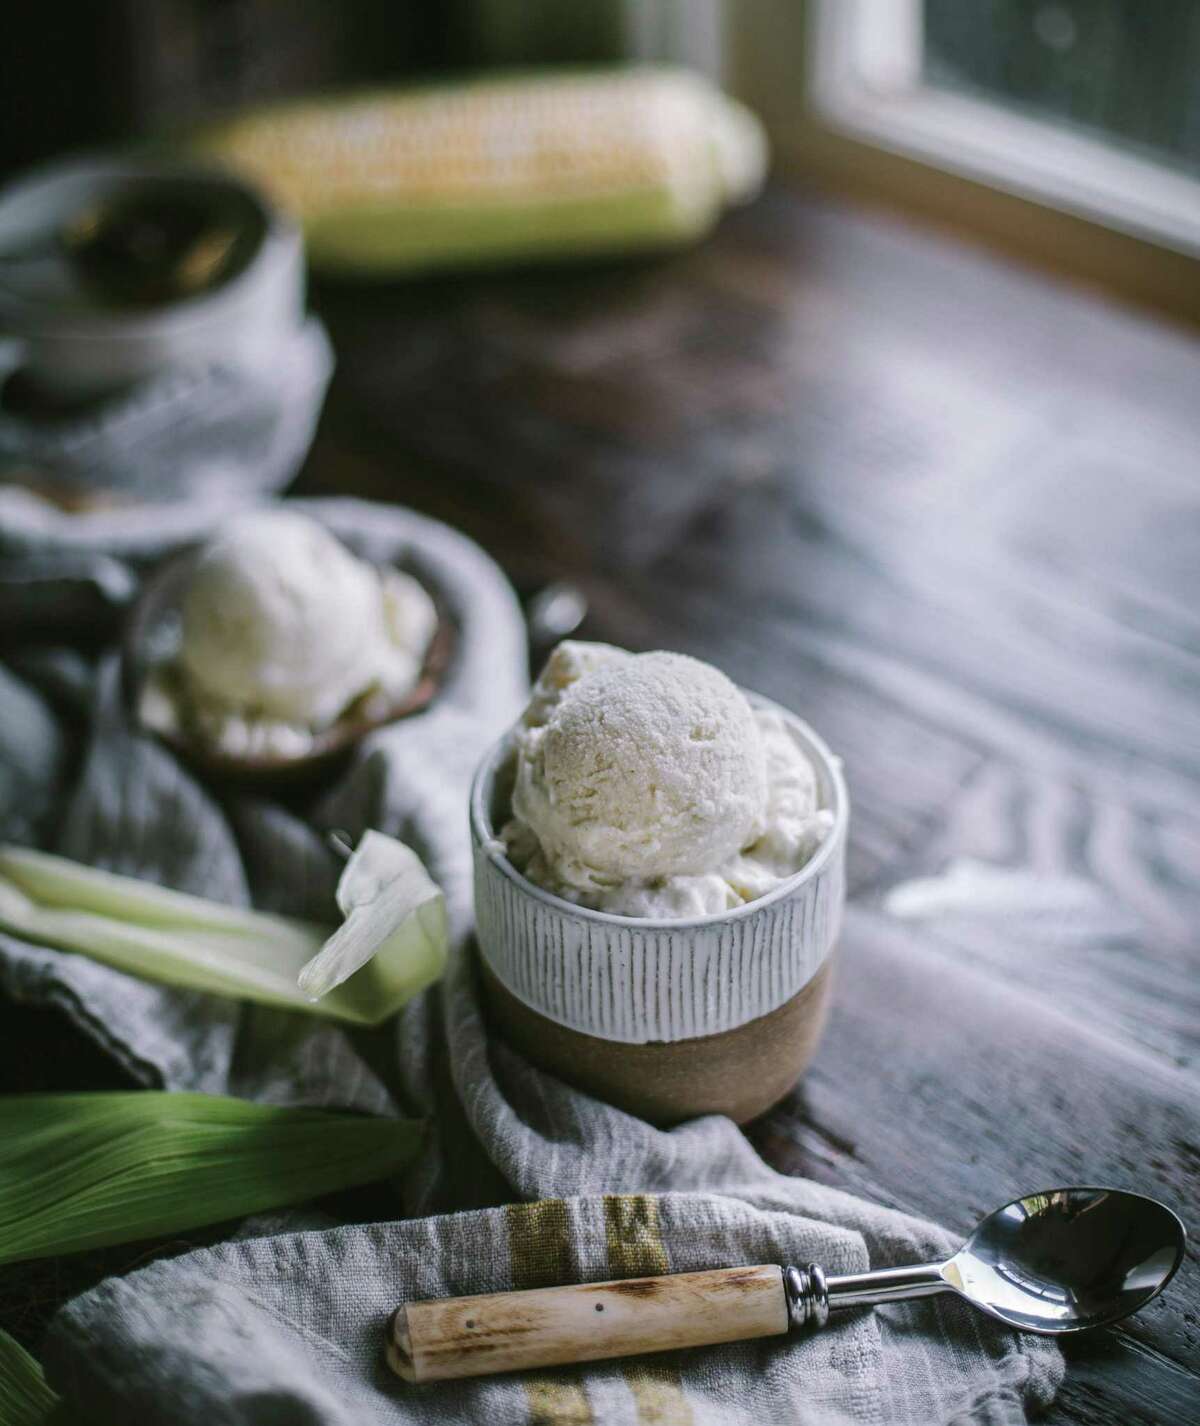 Cinnamon-Sweet Corn Ice Cream from "First We Eat" by Eva Kosmas Flores.